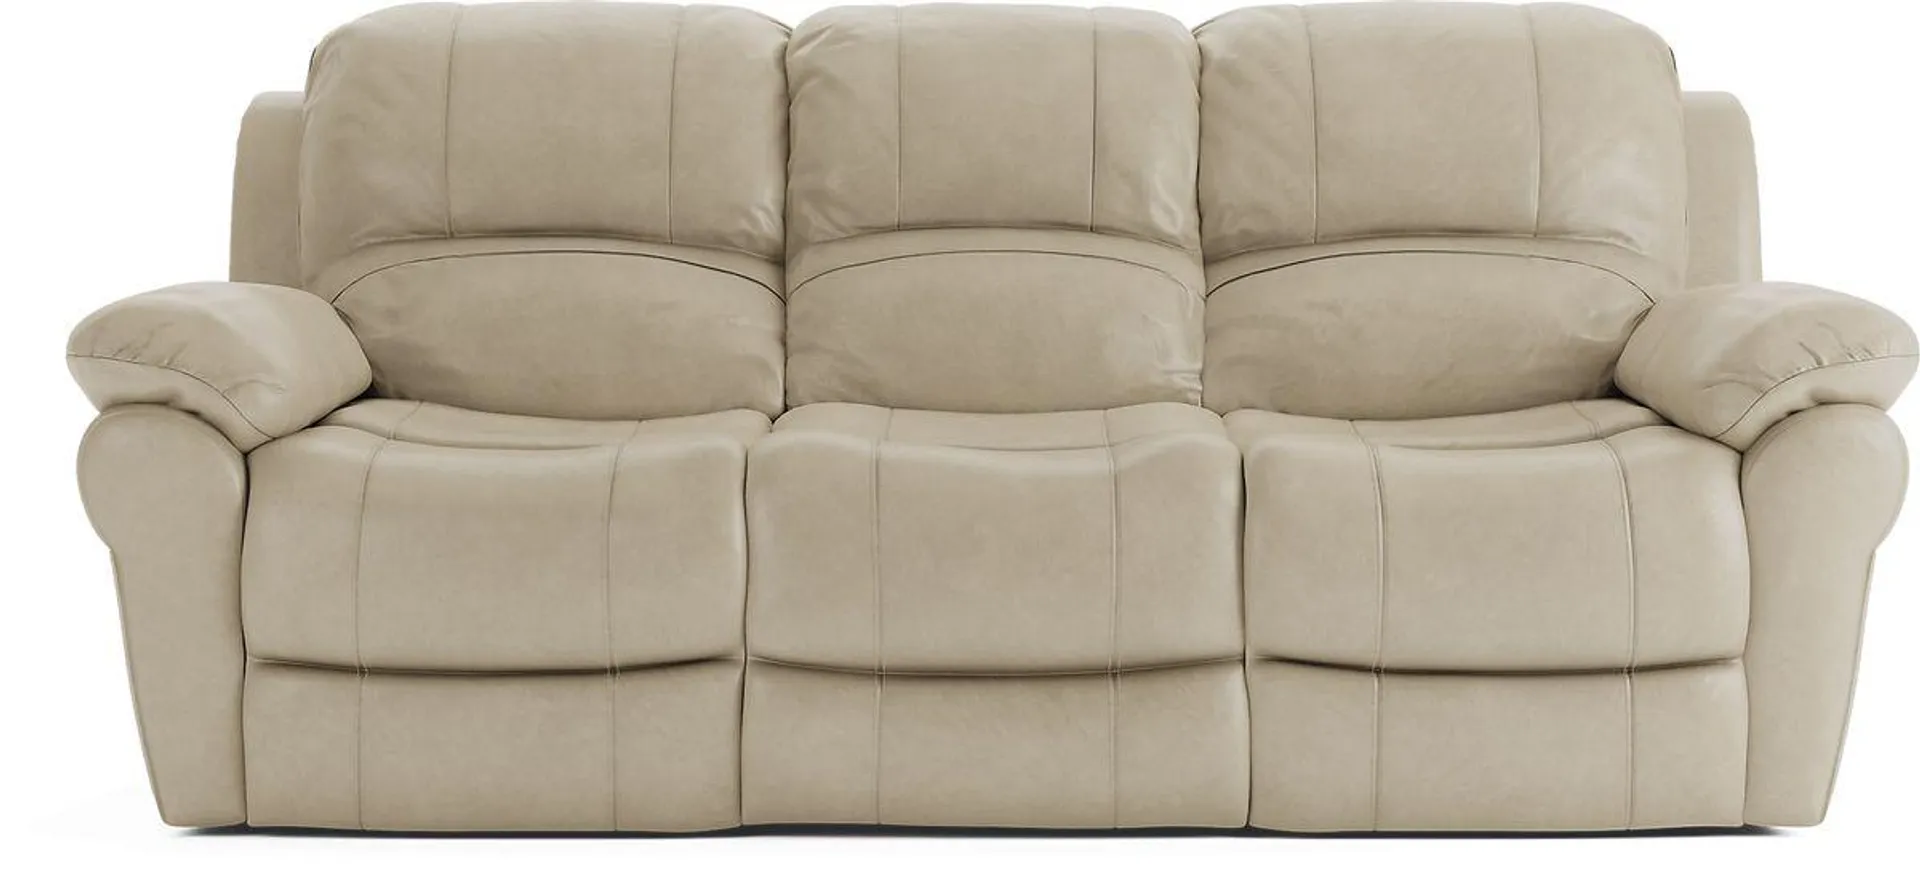 Vercelli Stone Beige Leather Power Reclining Sofa